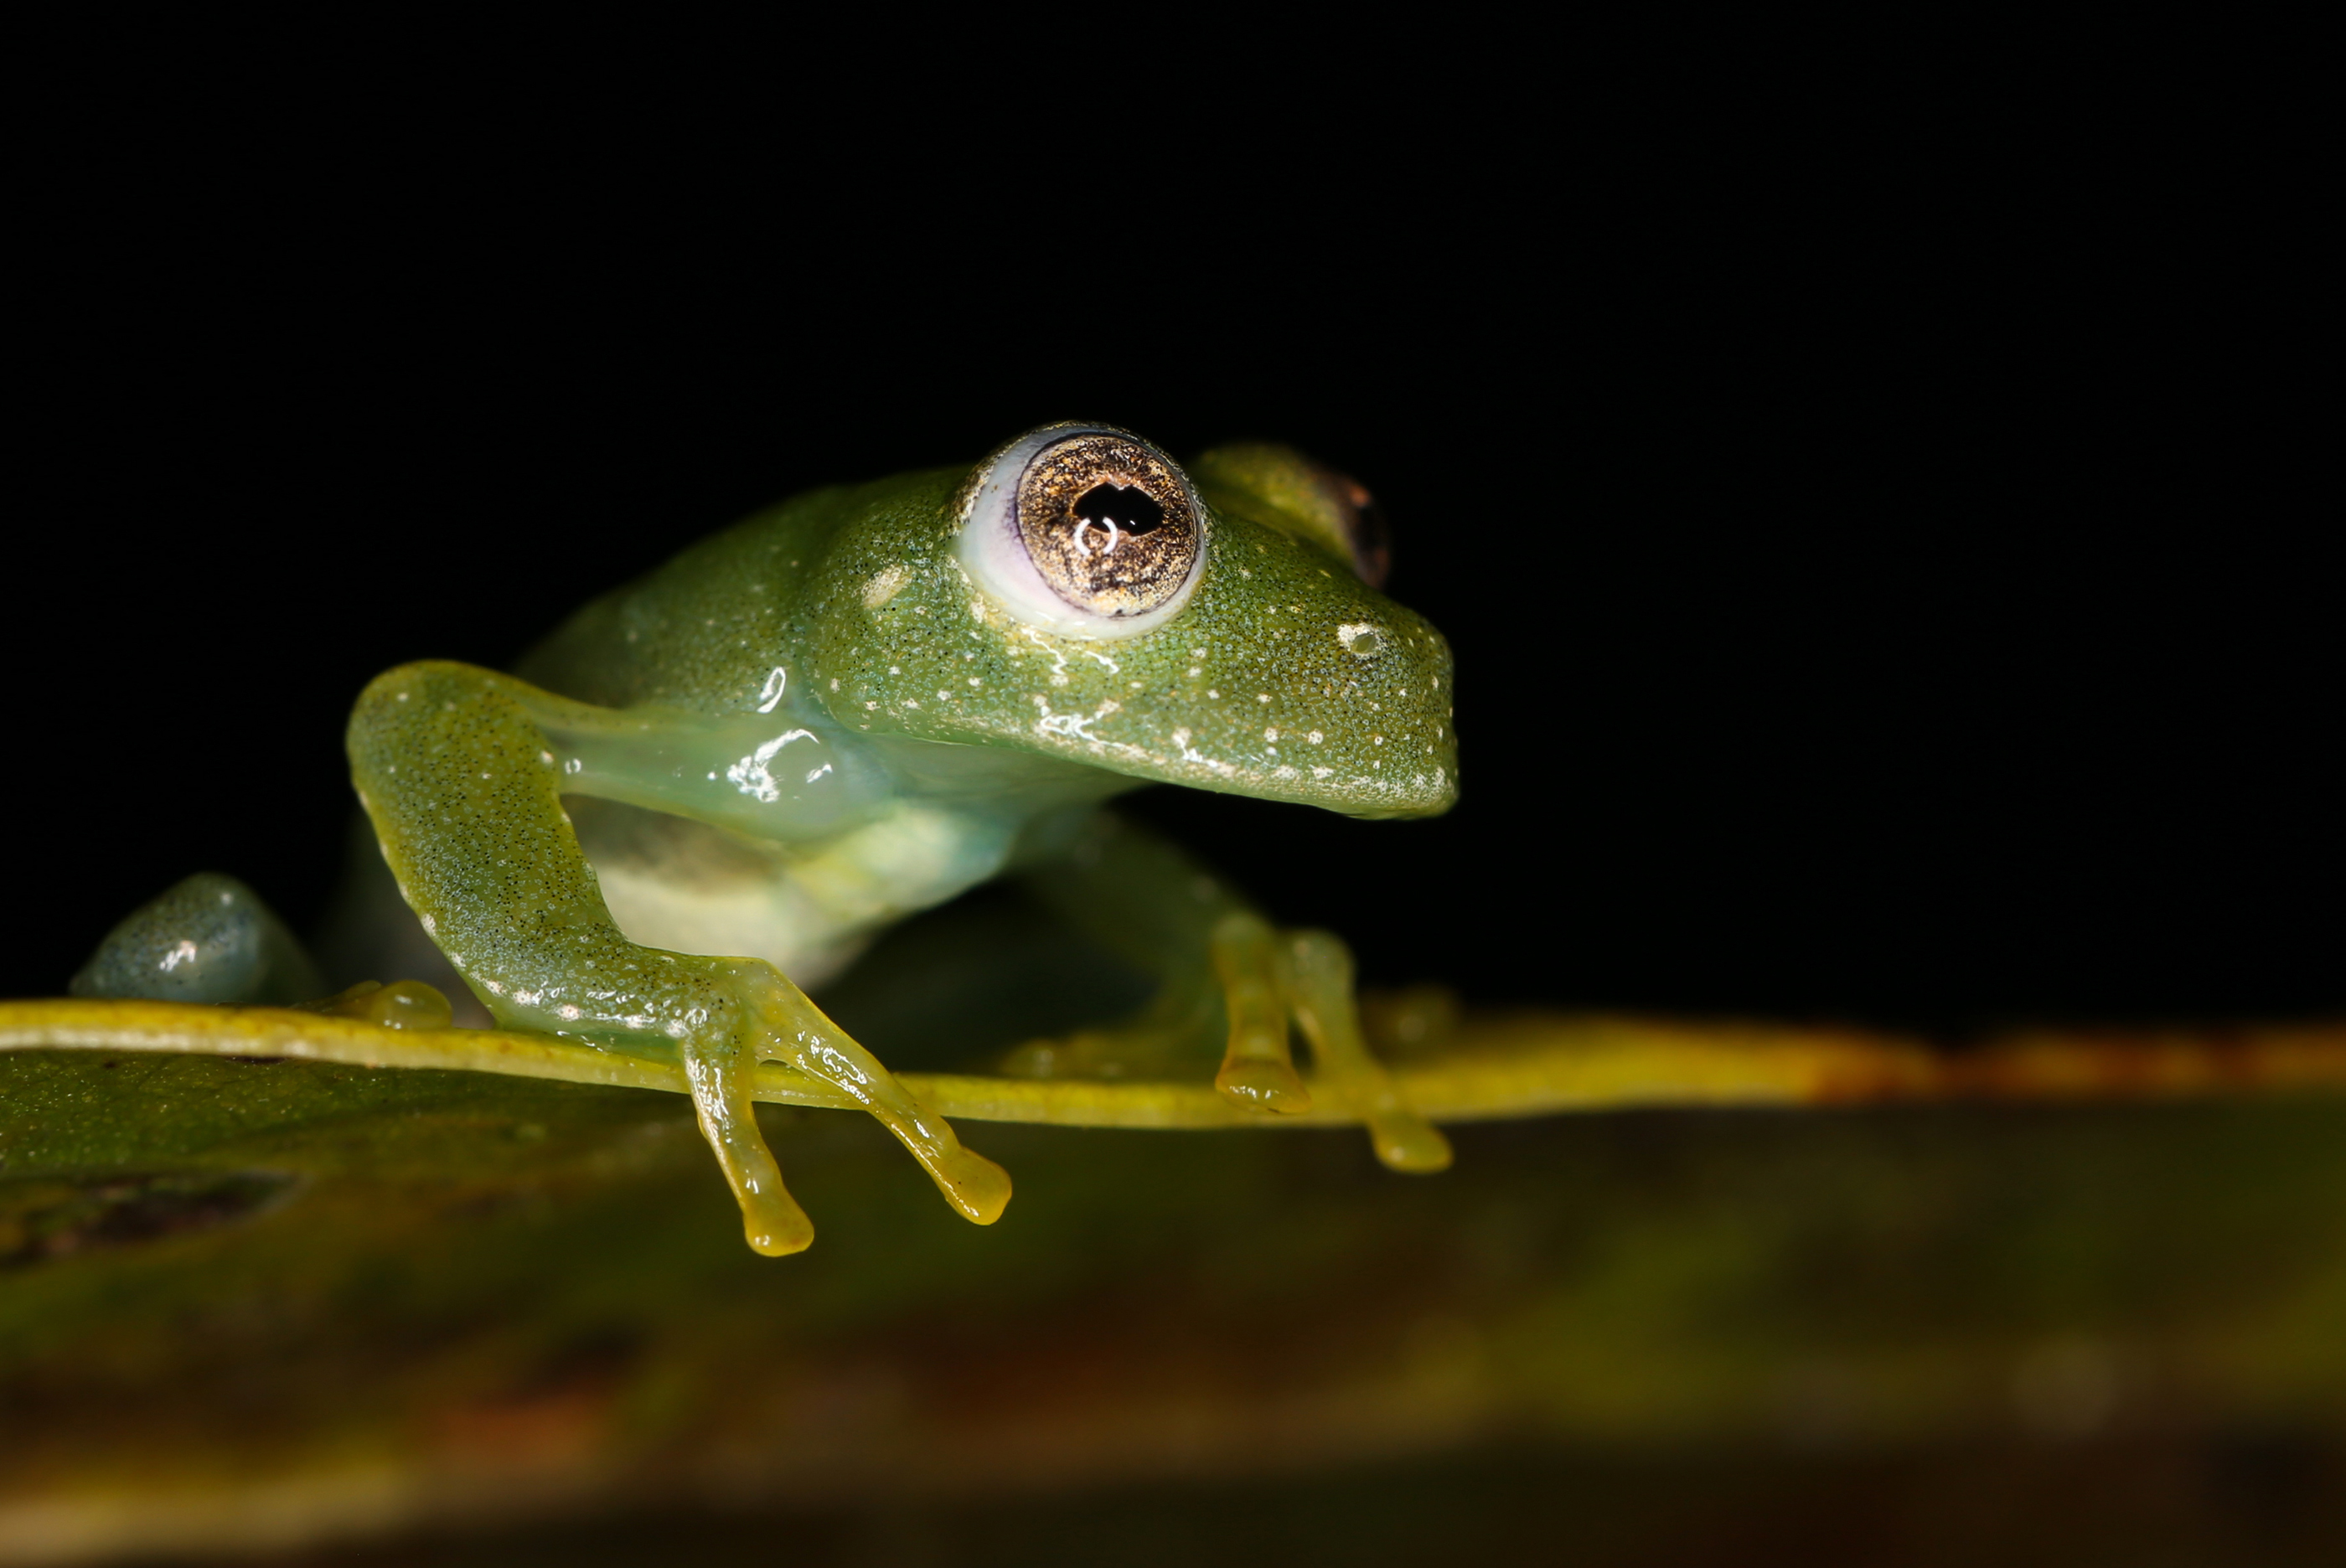 UA Researcher Assists in Global Study of Amphibians